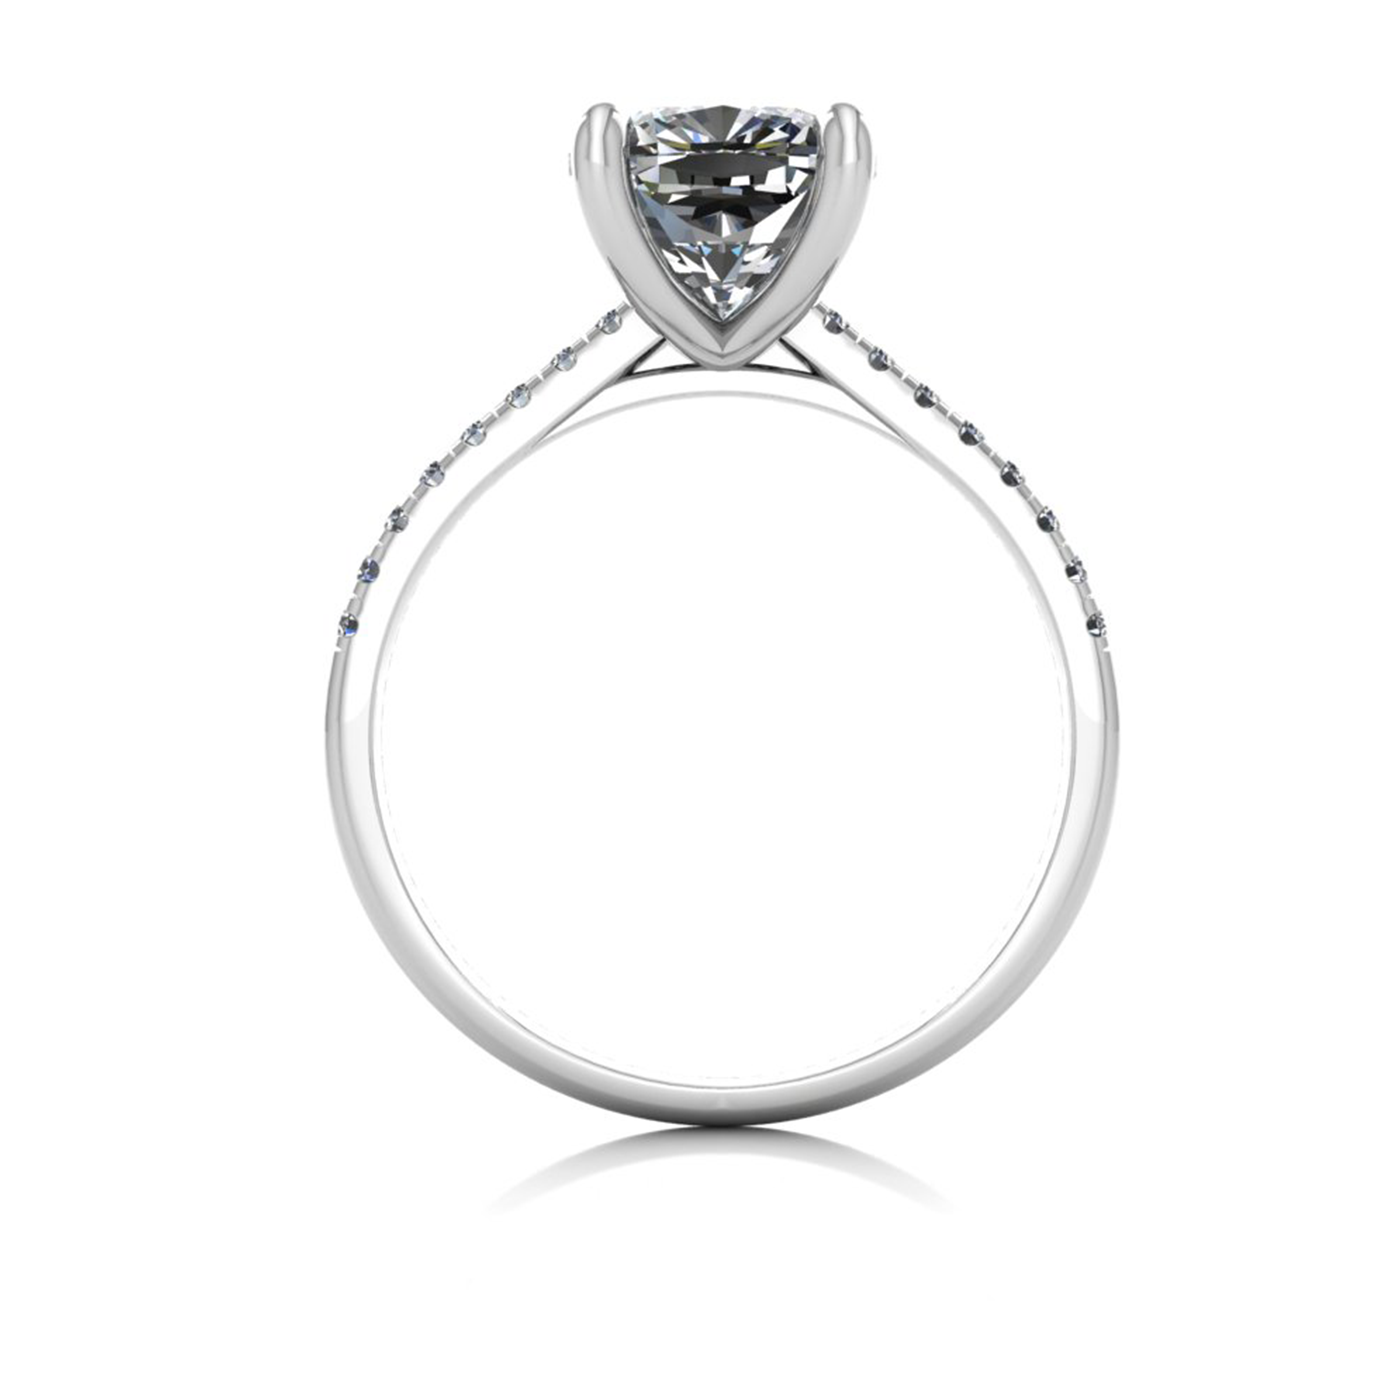 18k white gold 2.5ct 4 prongs cushion cut diamond engagement ring with whisper thin pavÉ set band